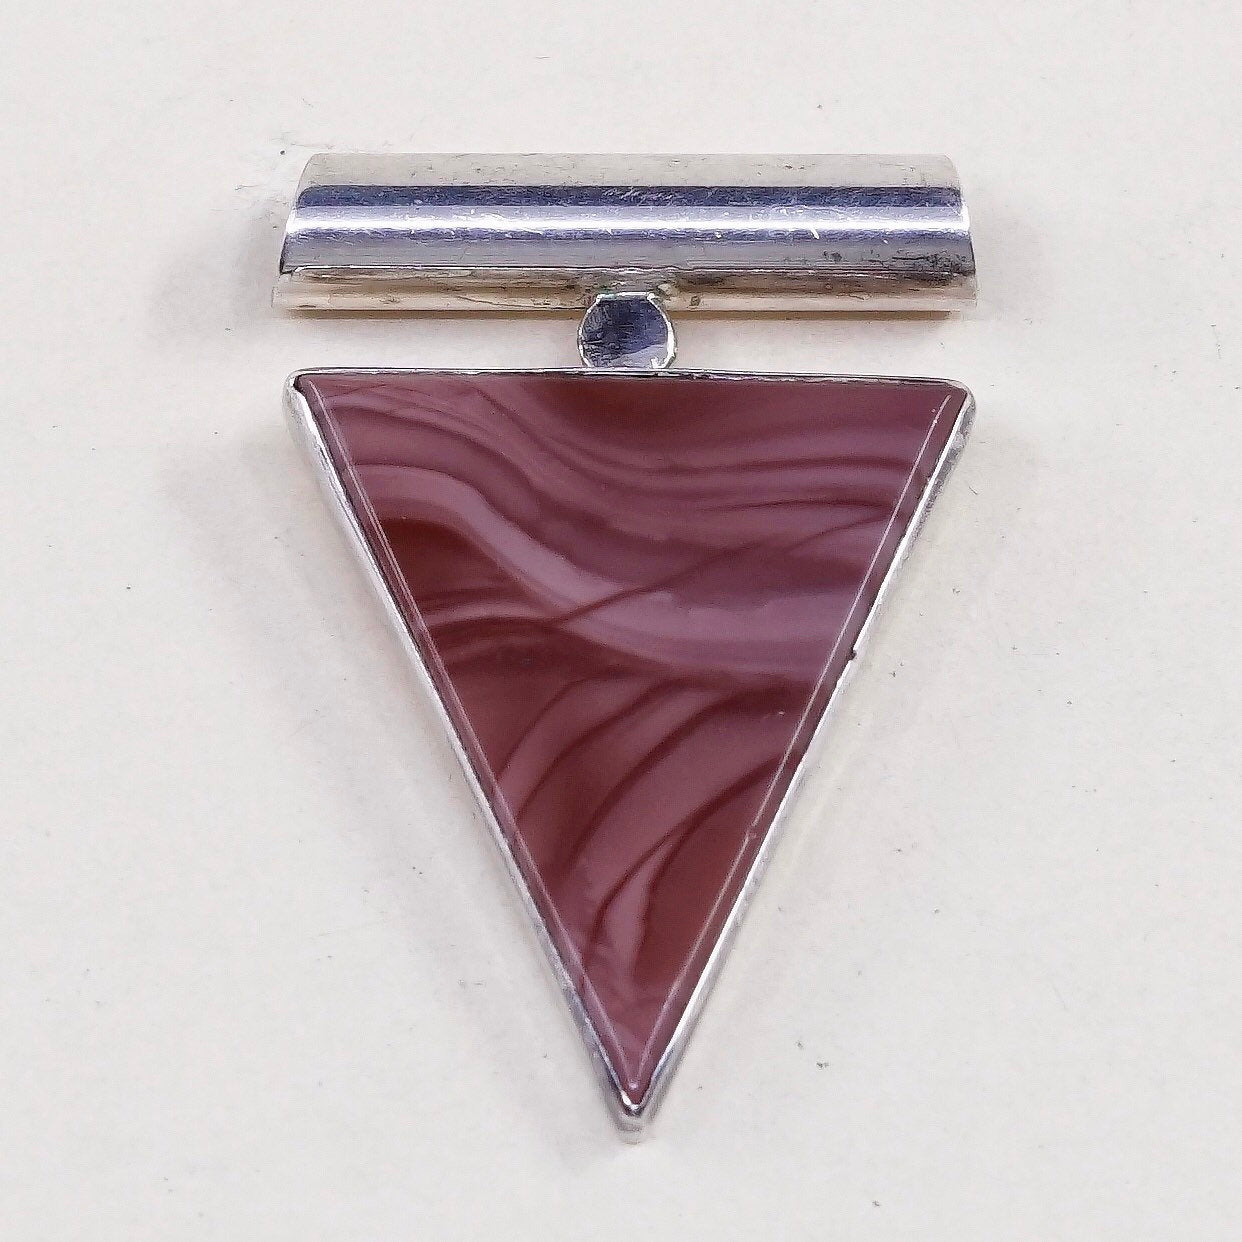 VTG southwestern sterling silver handmade pendant, 925 w/ triangular red agate